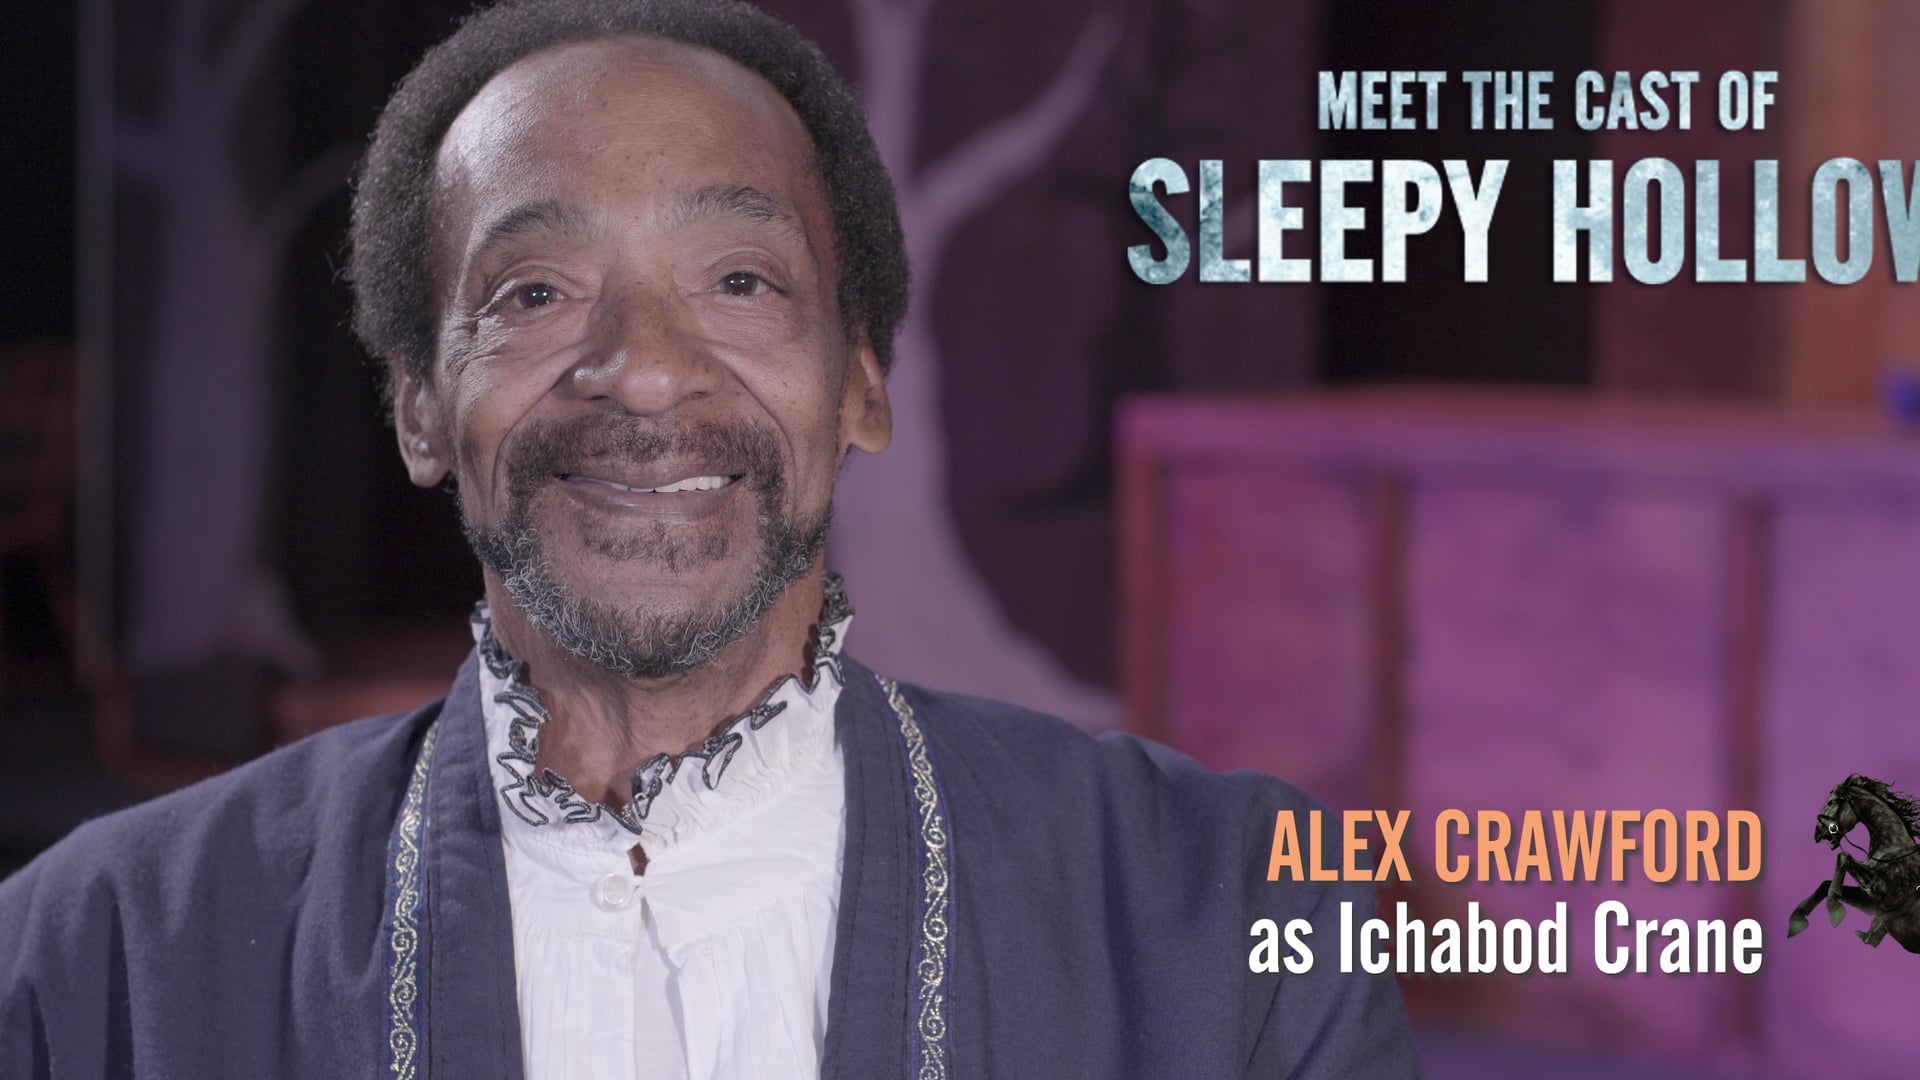 "Meet the Cast of Sleepy Hollow" - Alex Crawford as Ichabod Crane